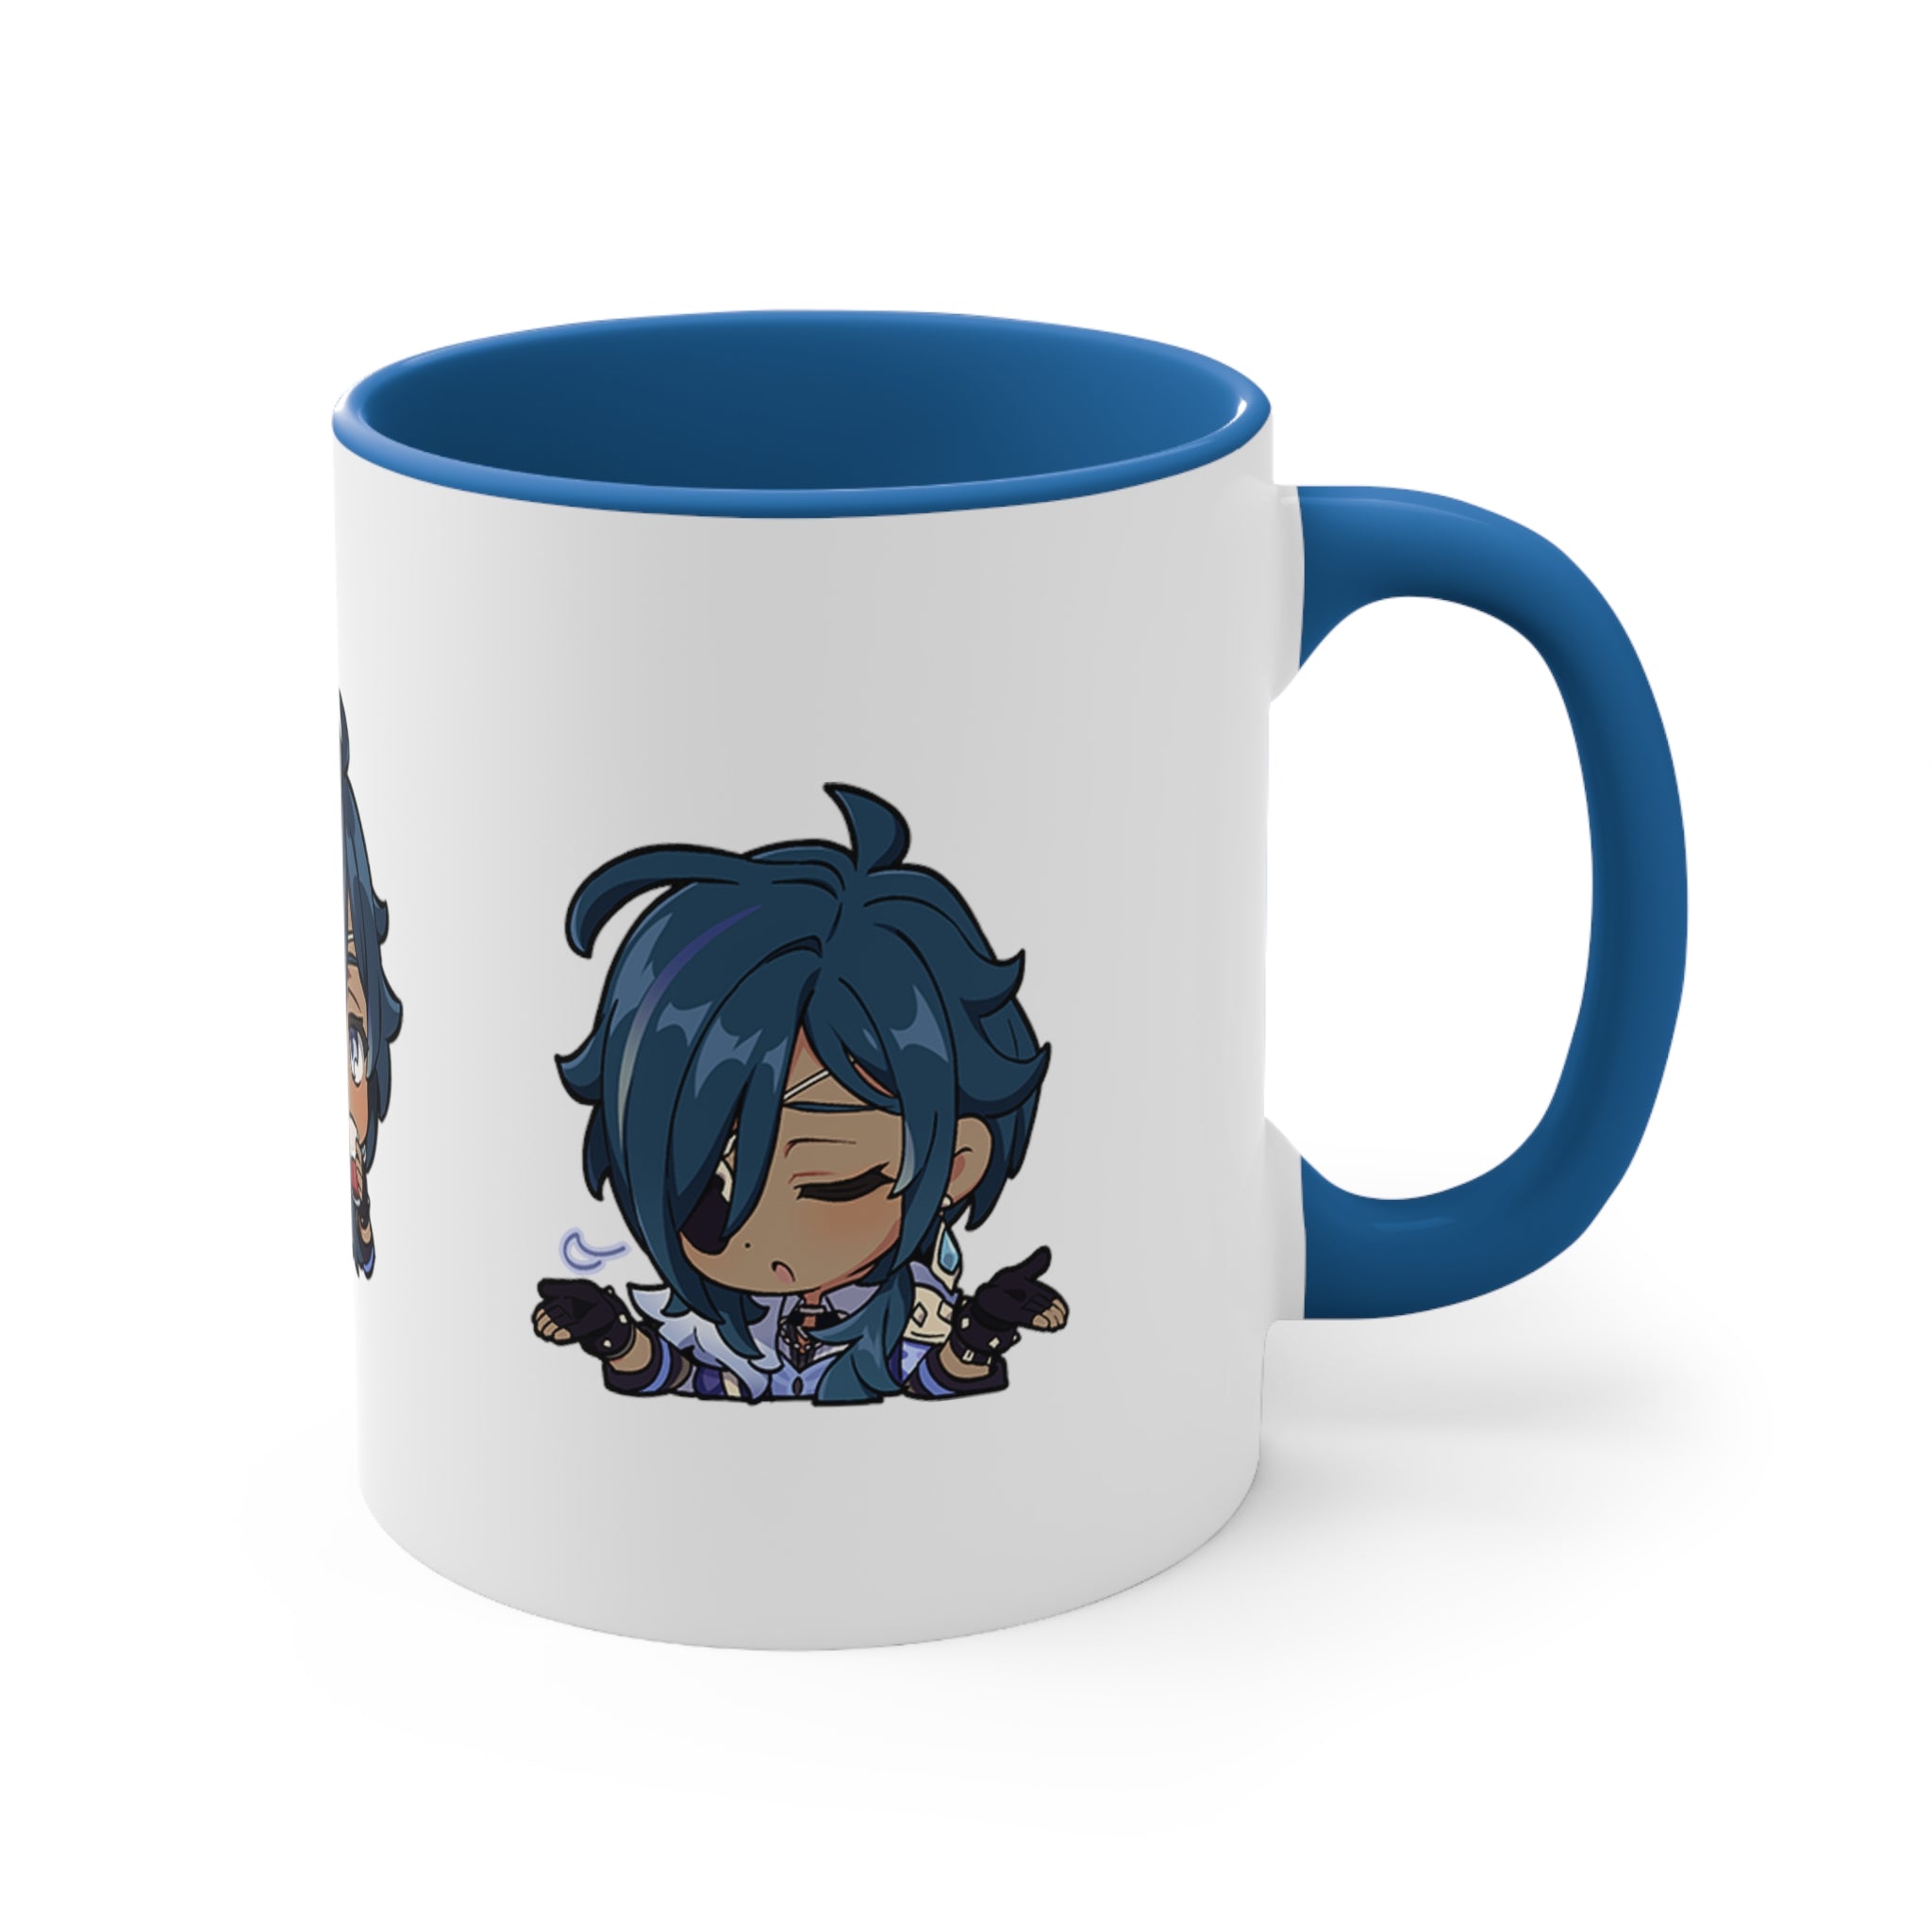 Kaeya Genshin Impact Accent Coffee Mug, 11oz Cups Mugs Cup Gift For Gamer Gifts Game Anime Fanart Fan Birthday Valentine's Christmas